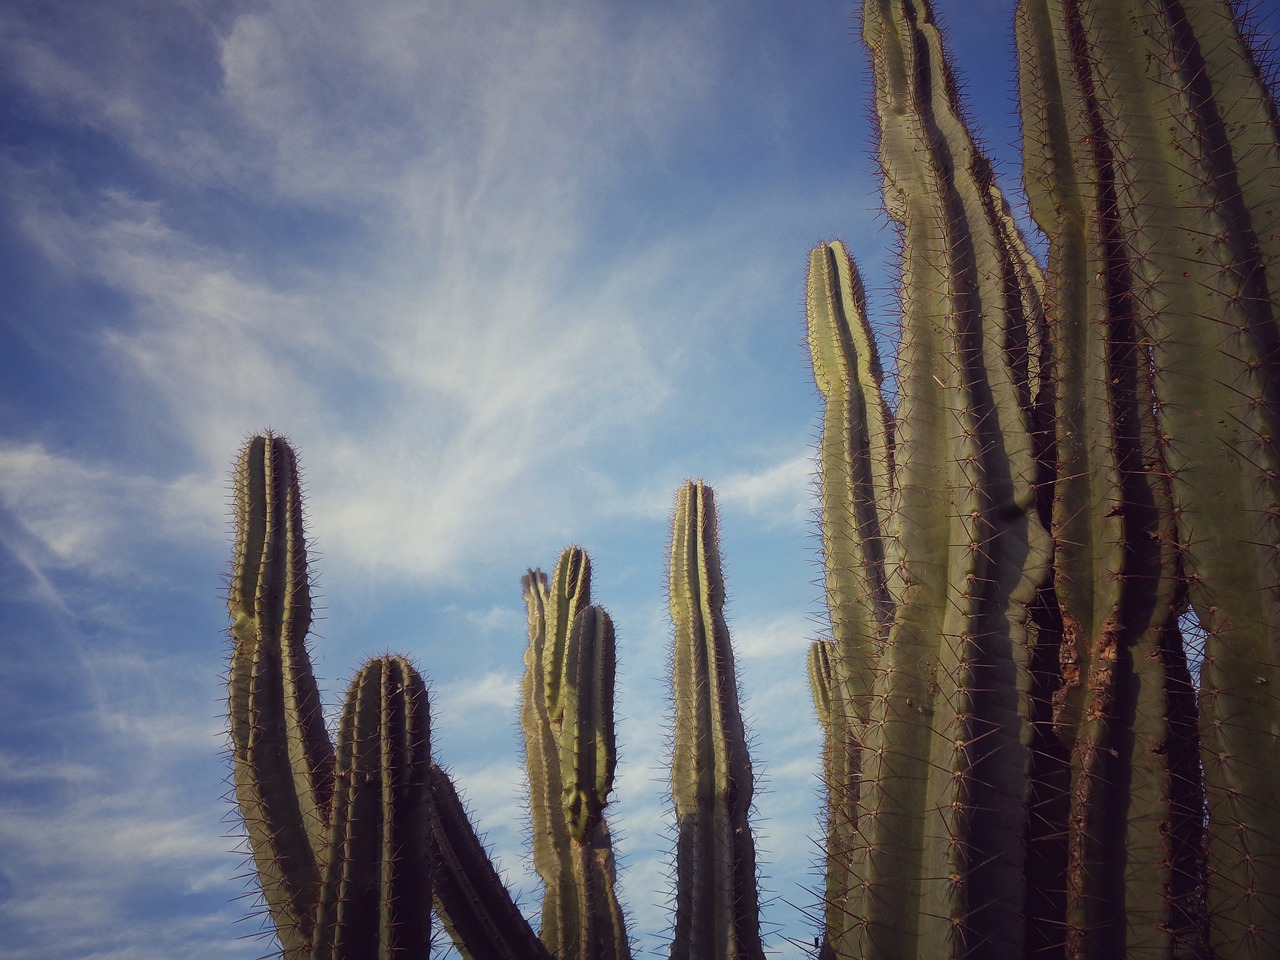 cactus nature thorny free photo